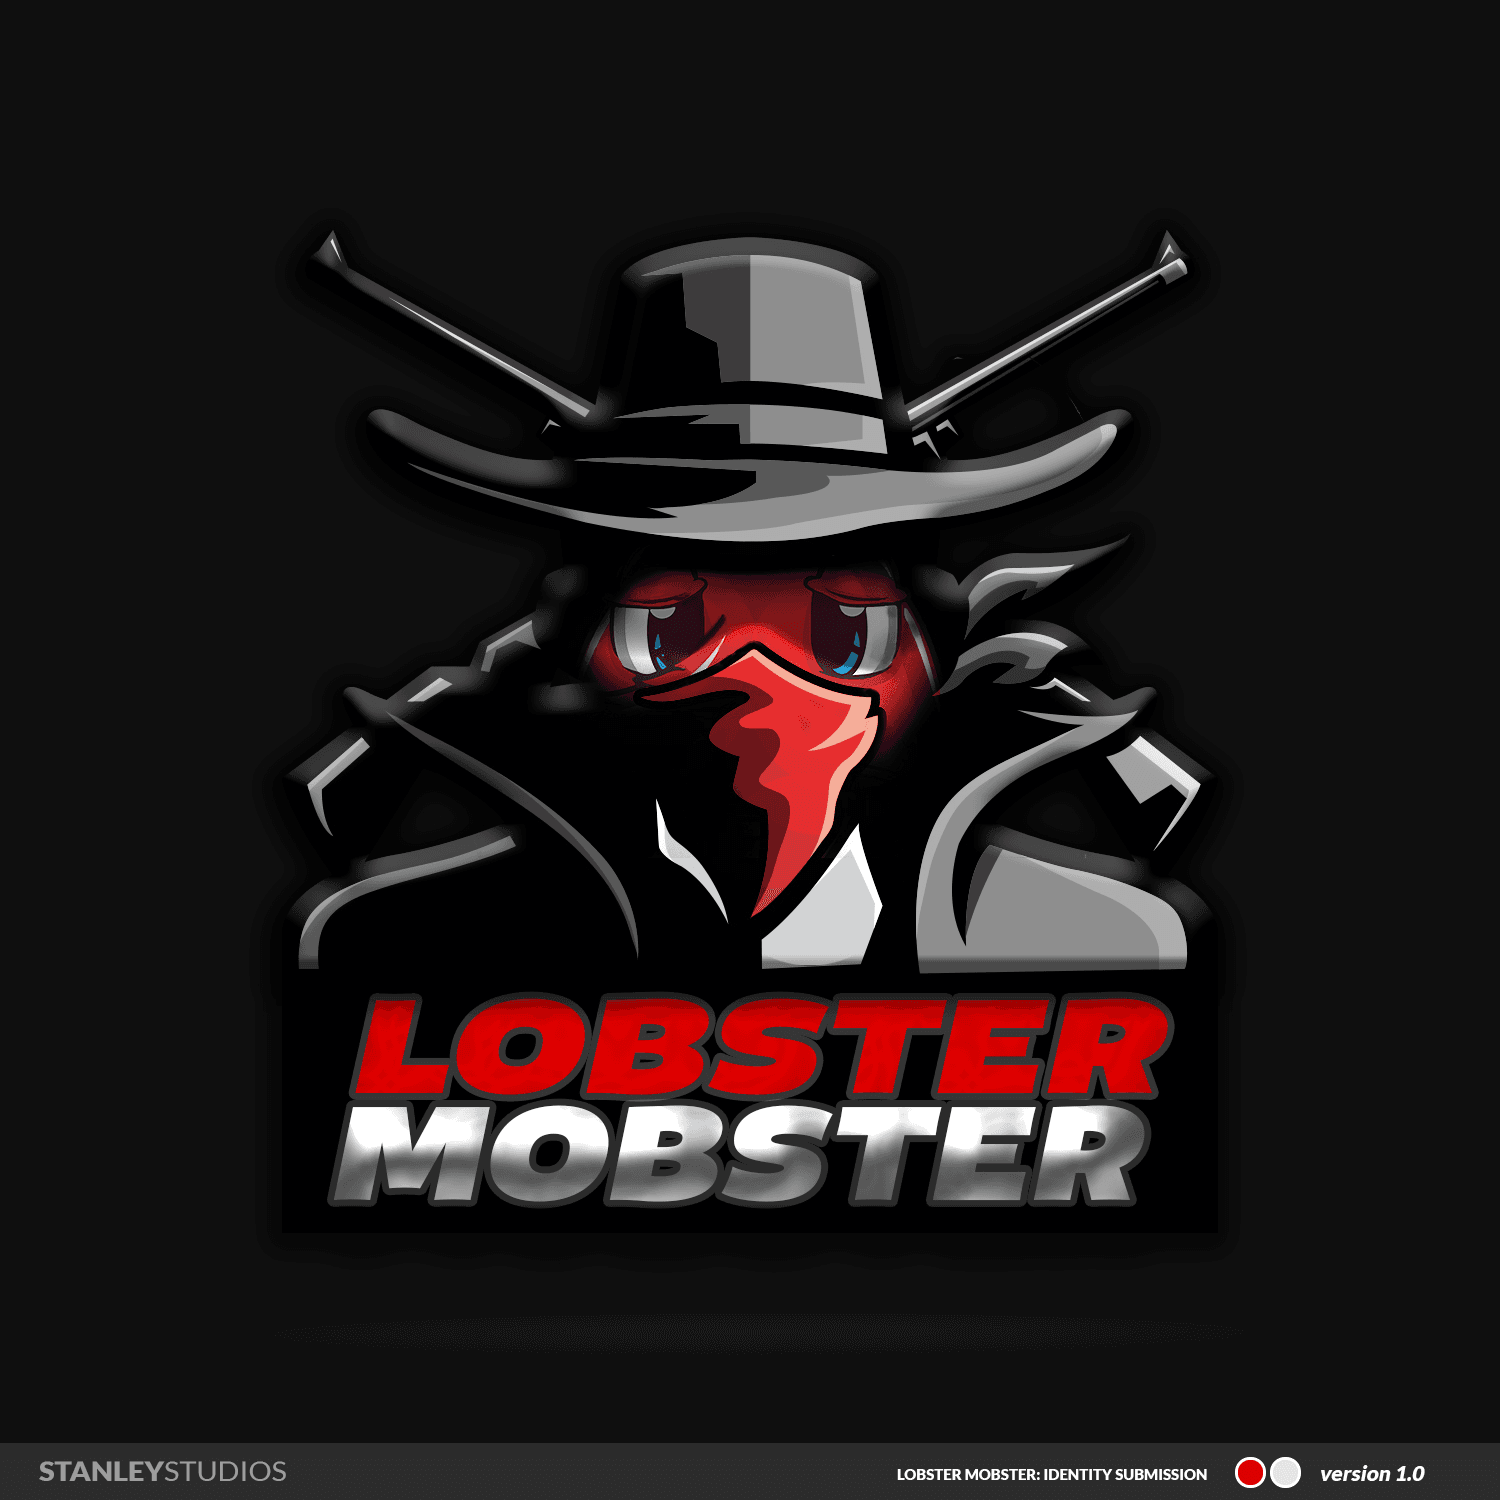 lobstermobster902